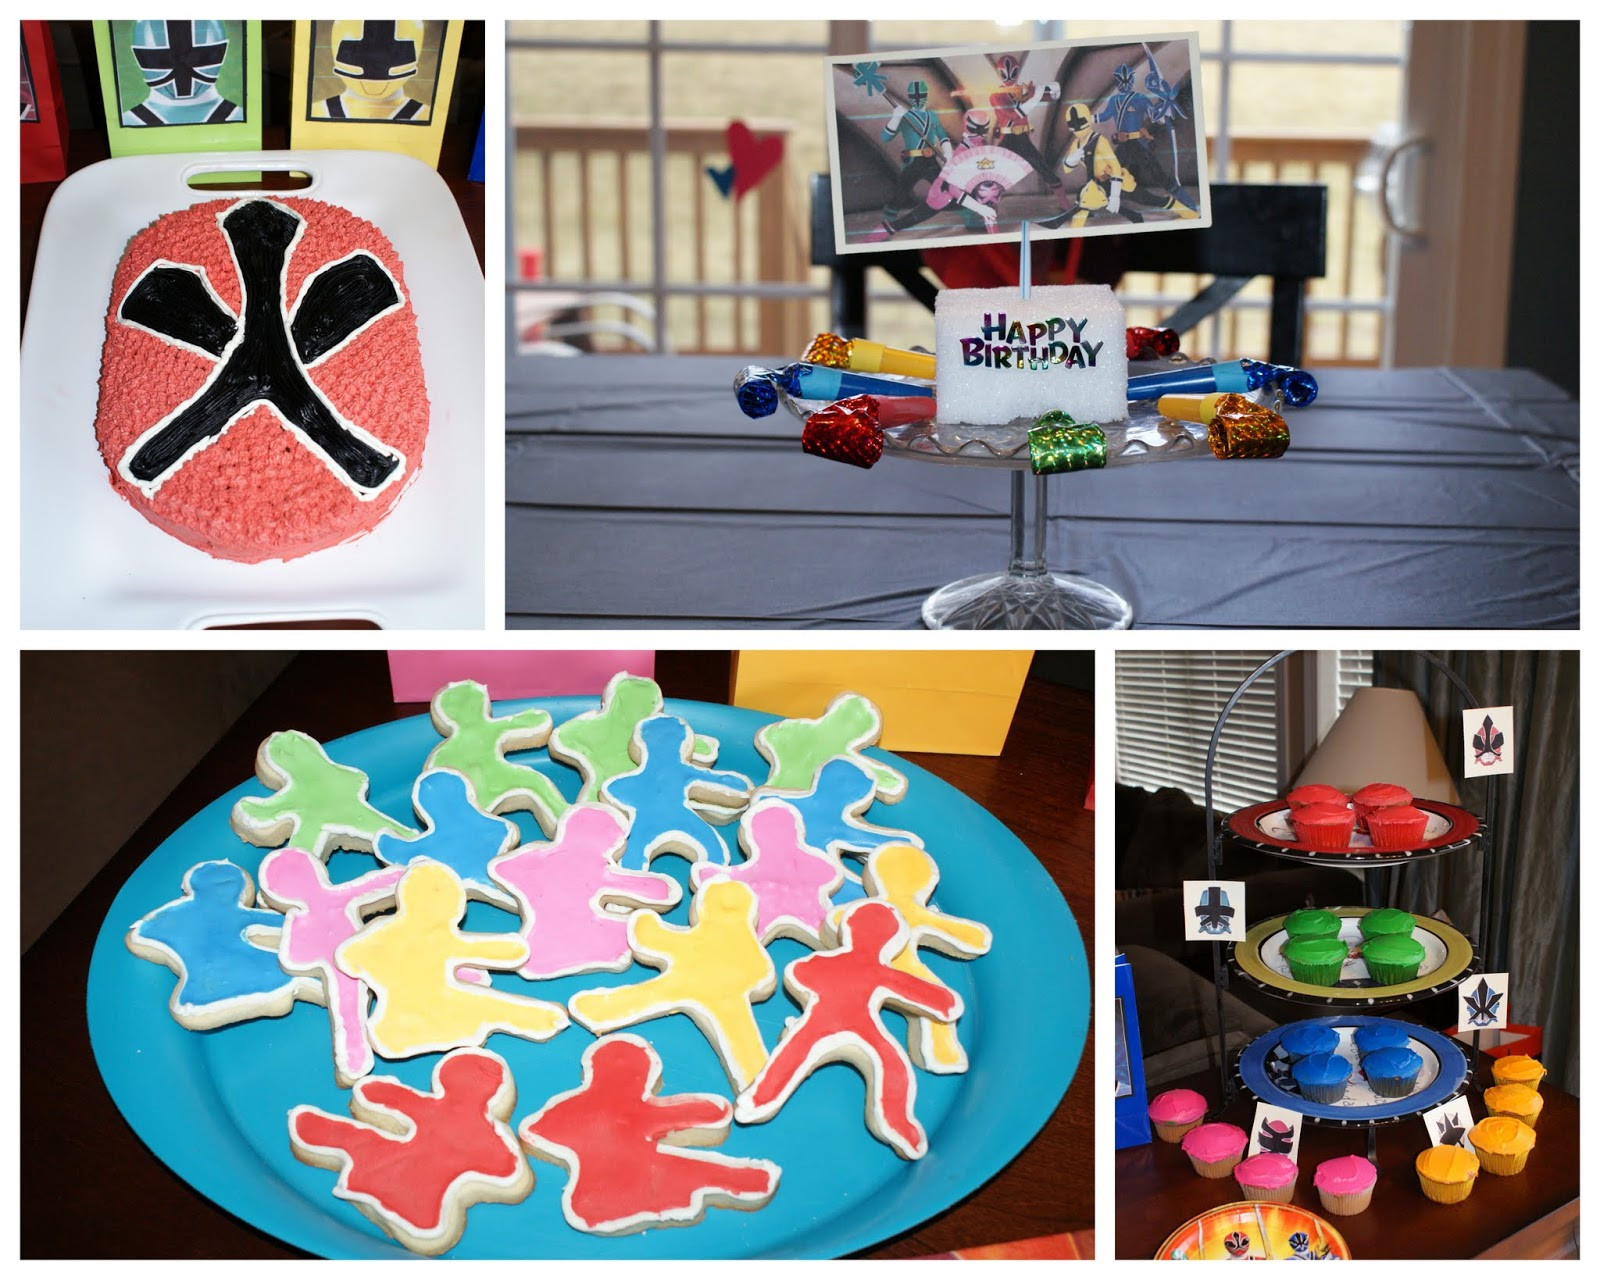 Power Rangers Party Food Ideas
 Crafty Celebrations Power Ranger Birthday Party